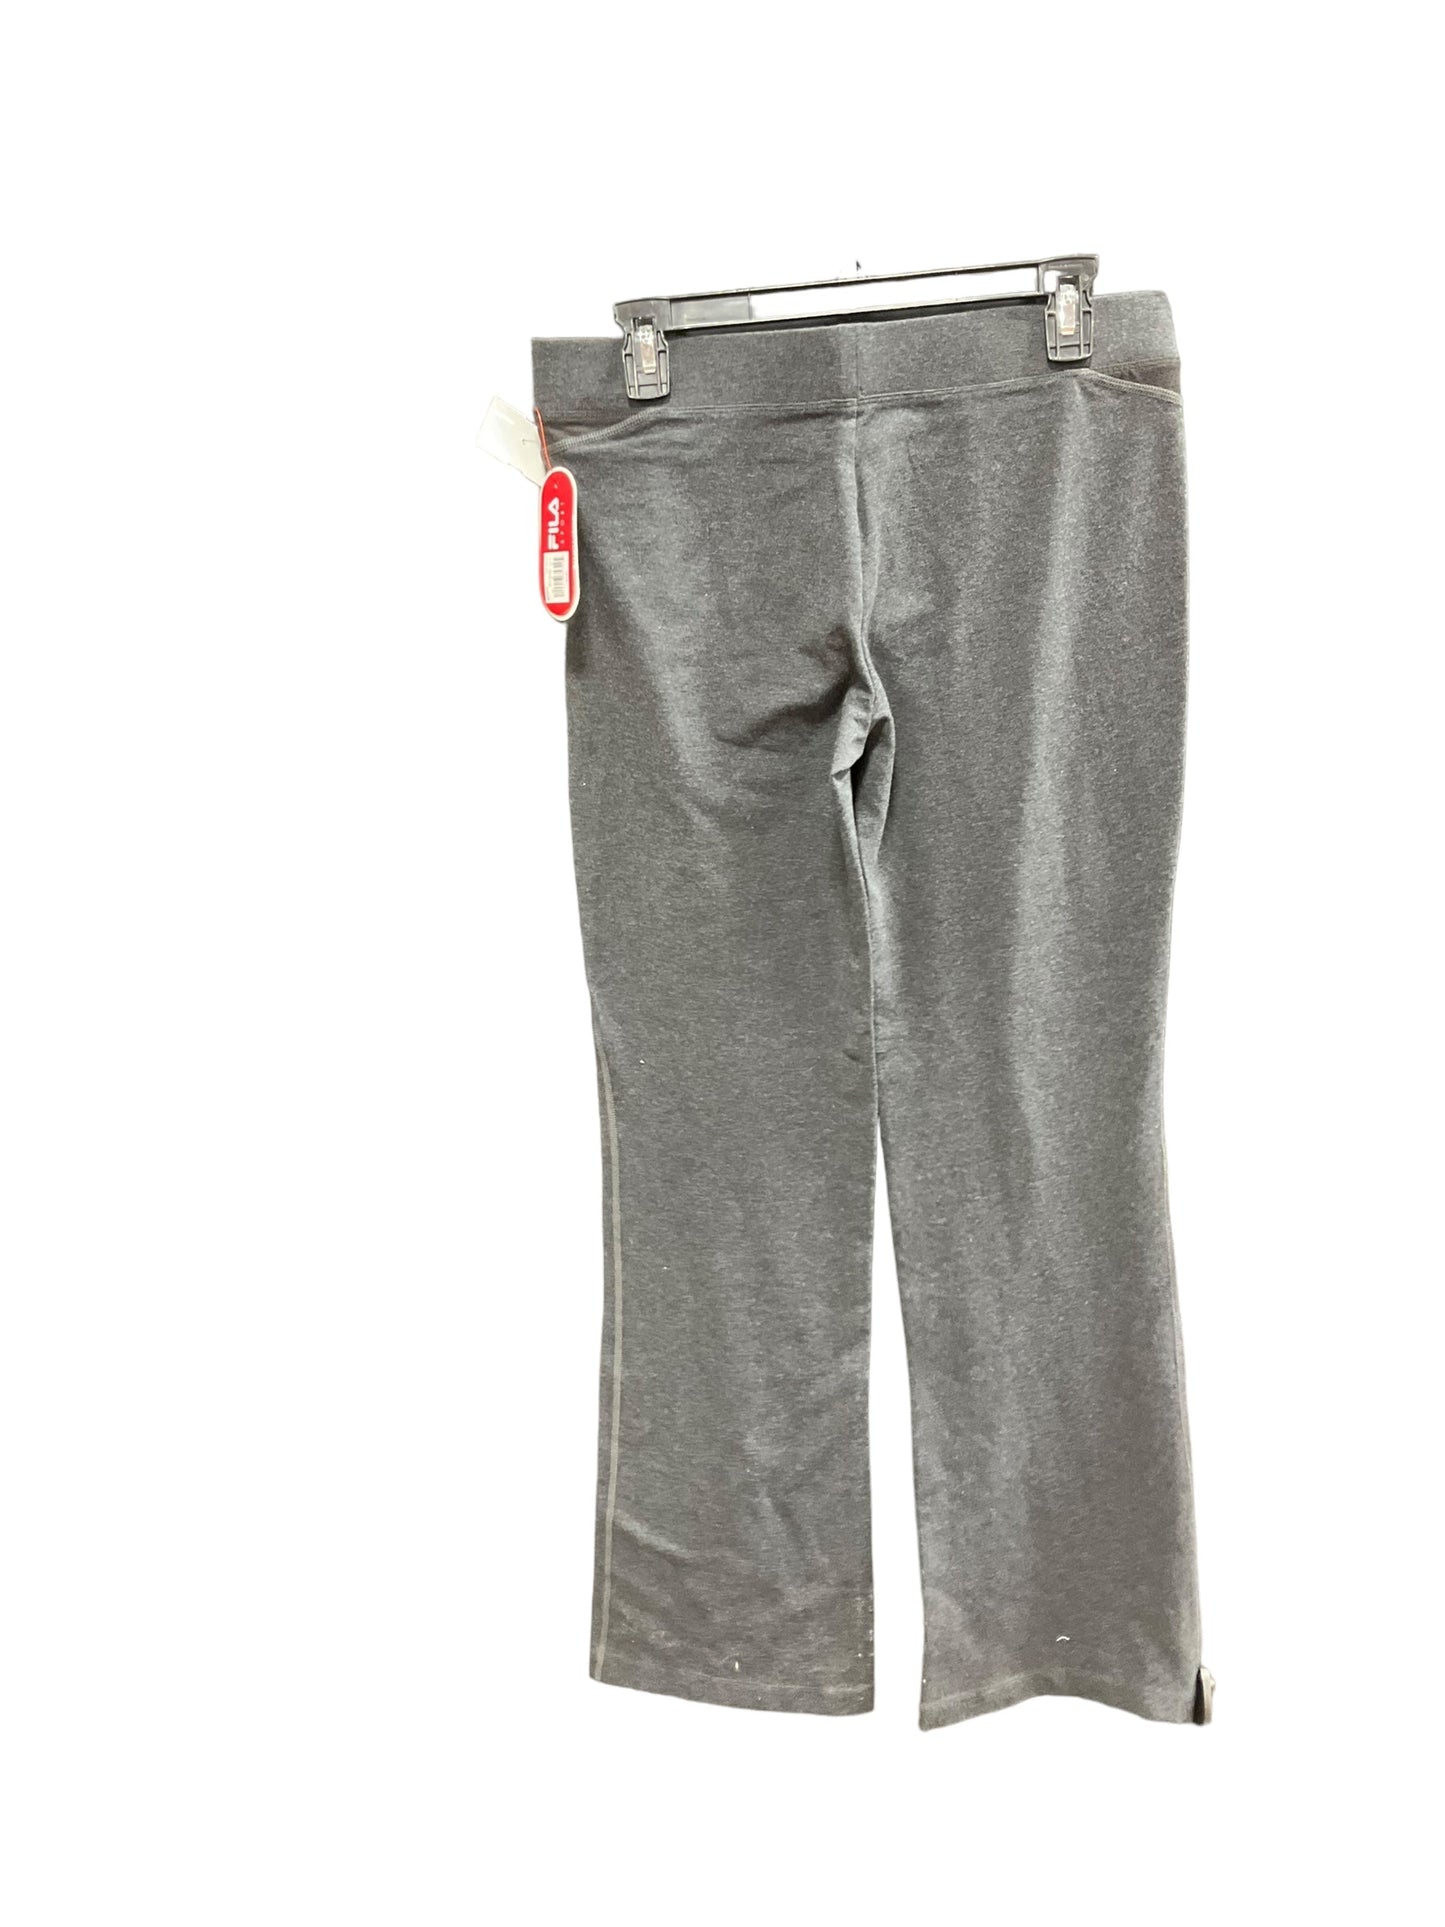 Grey Athletic Pants Fila, Size M